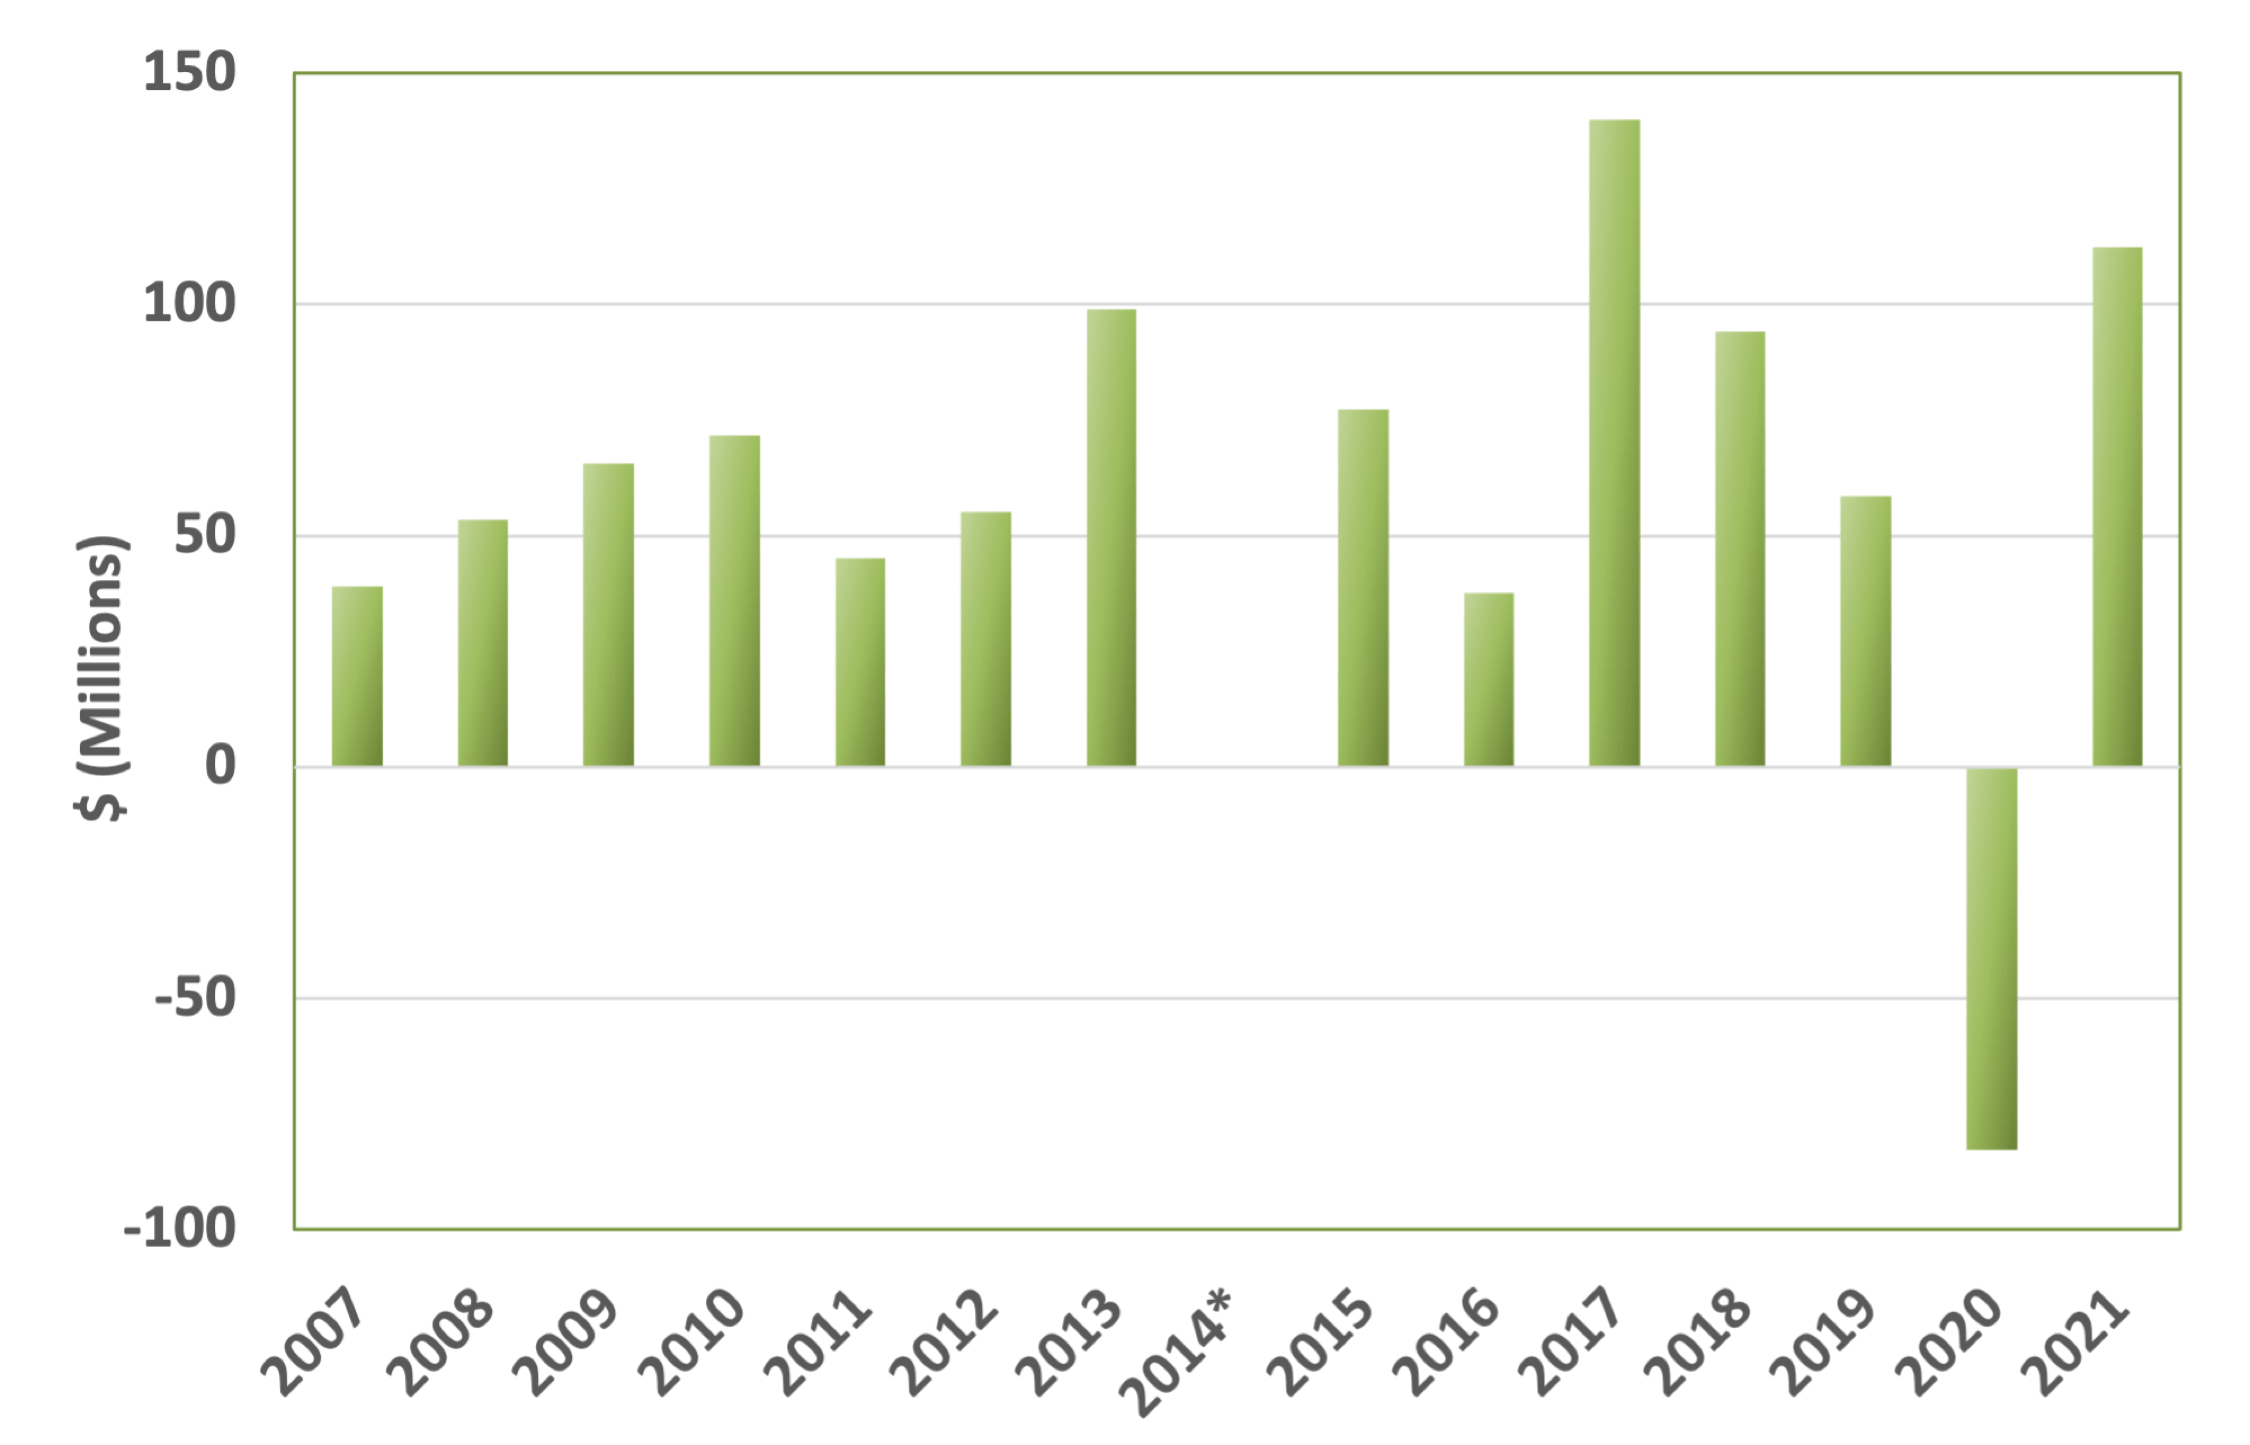 College Board's Profit 2007 to 2016